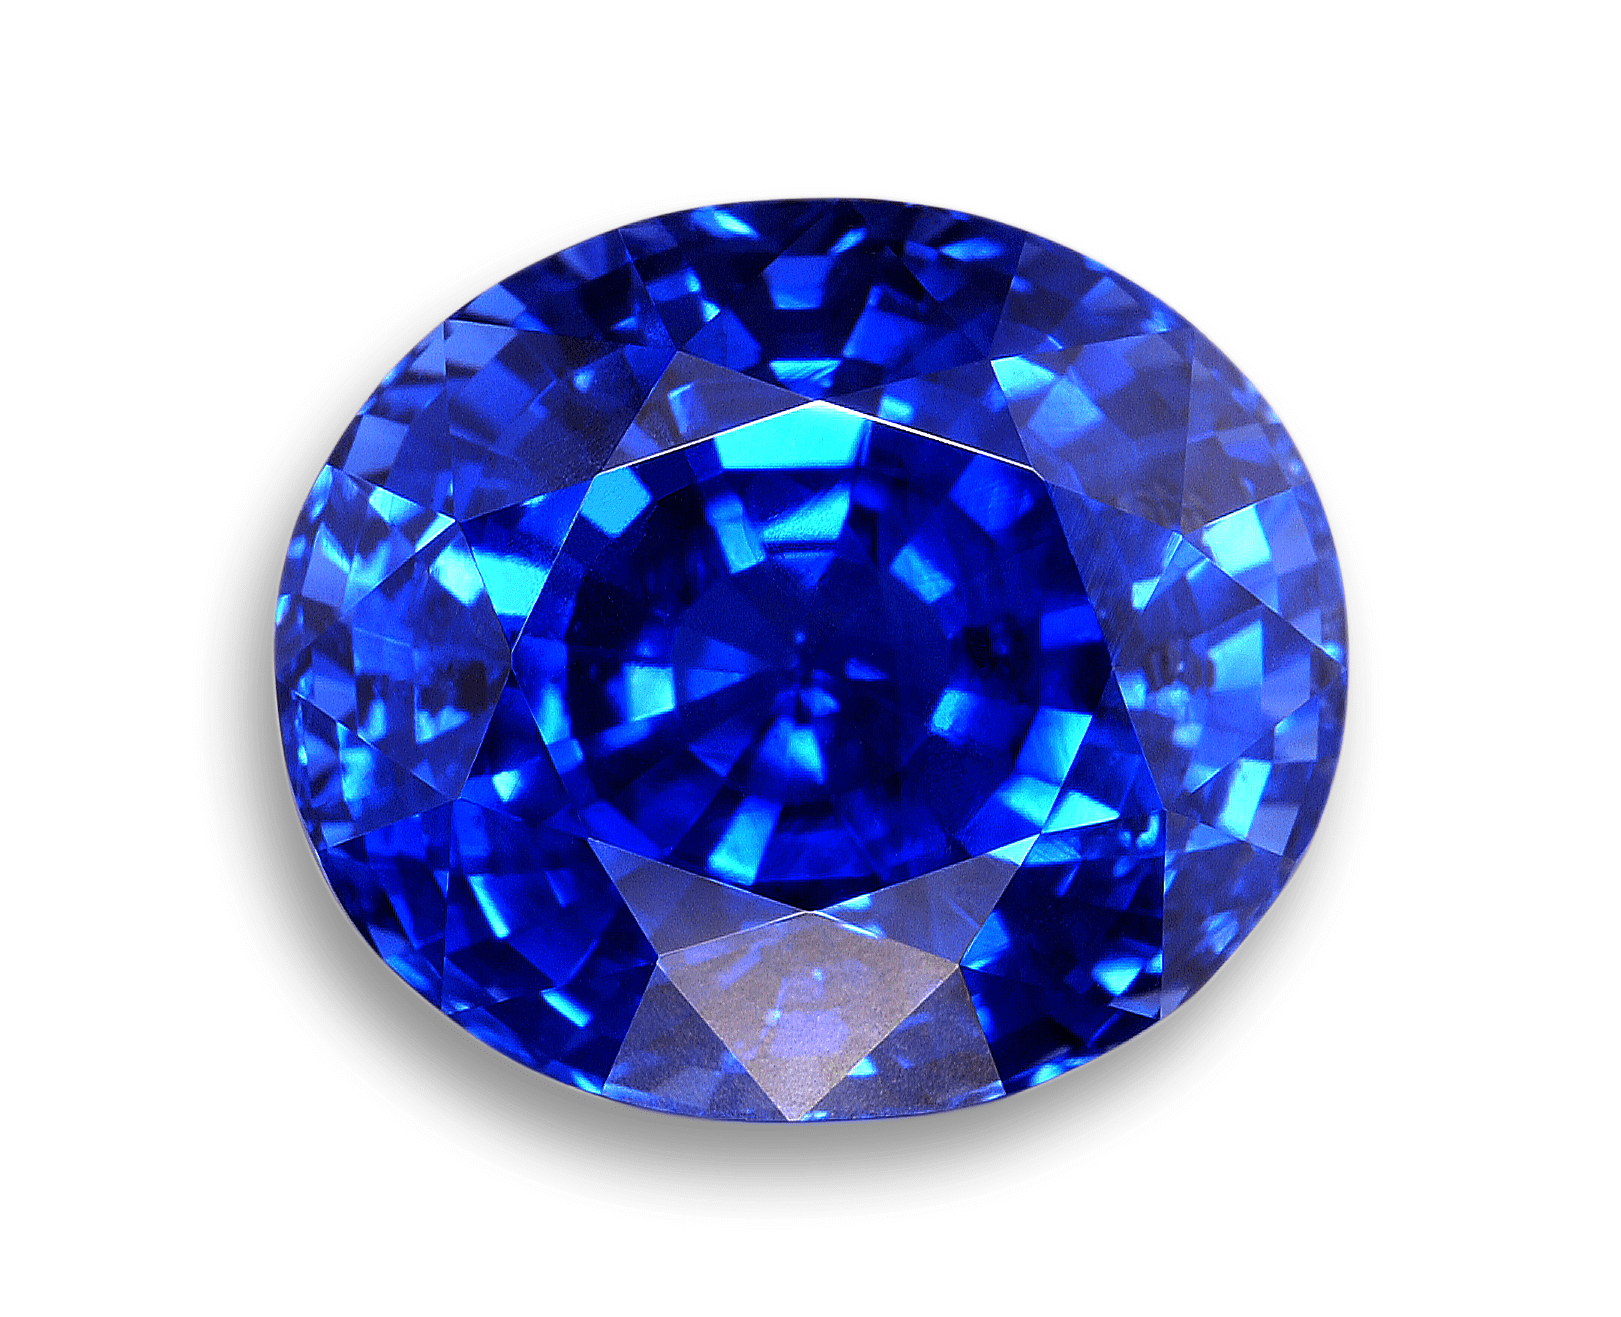 Blue sapphire rough stone